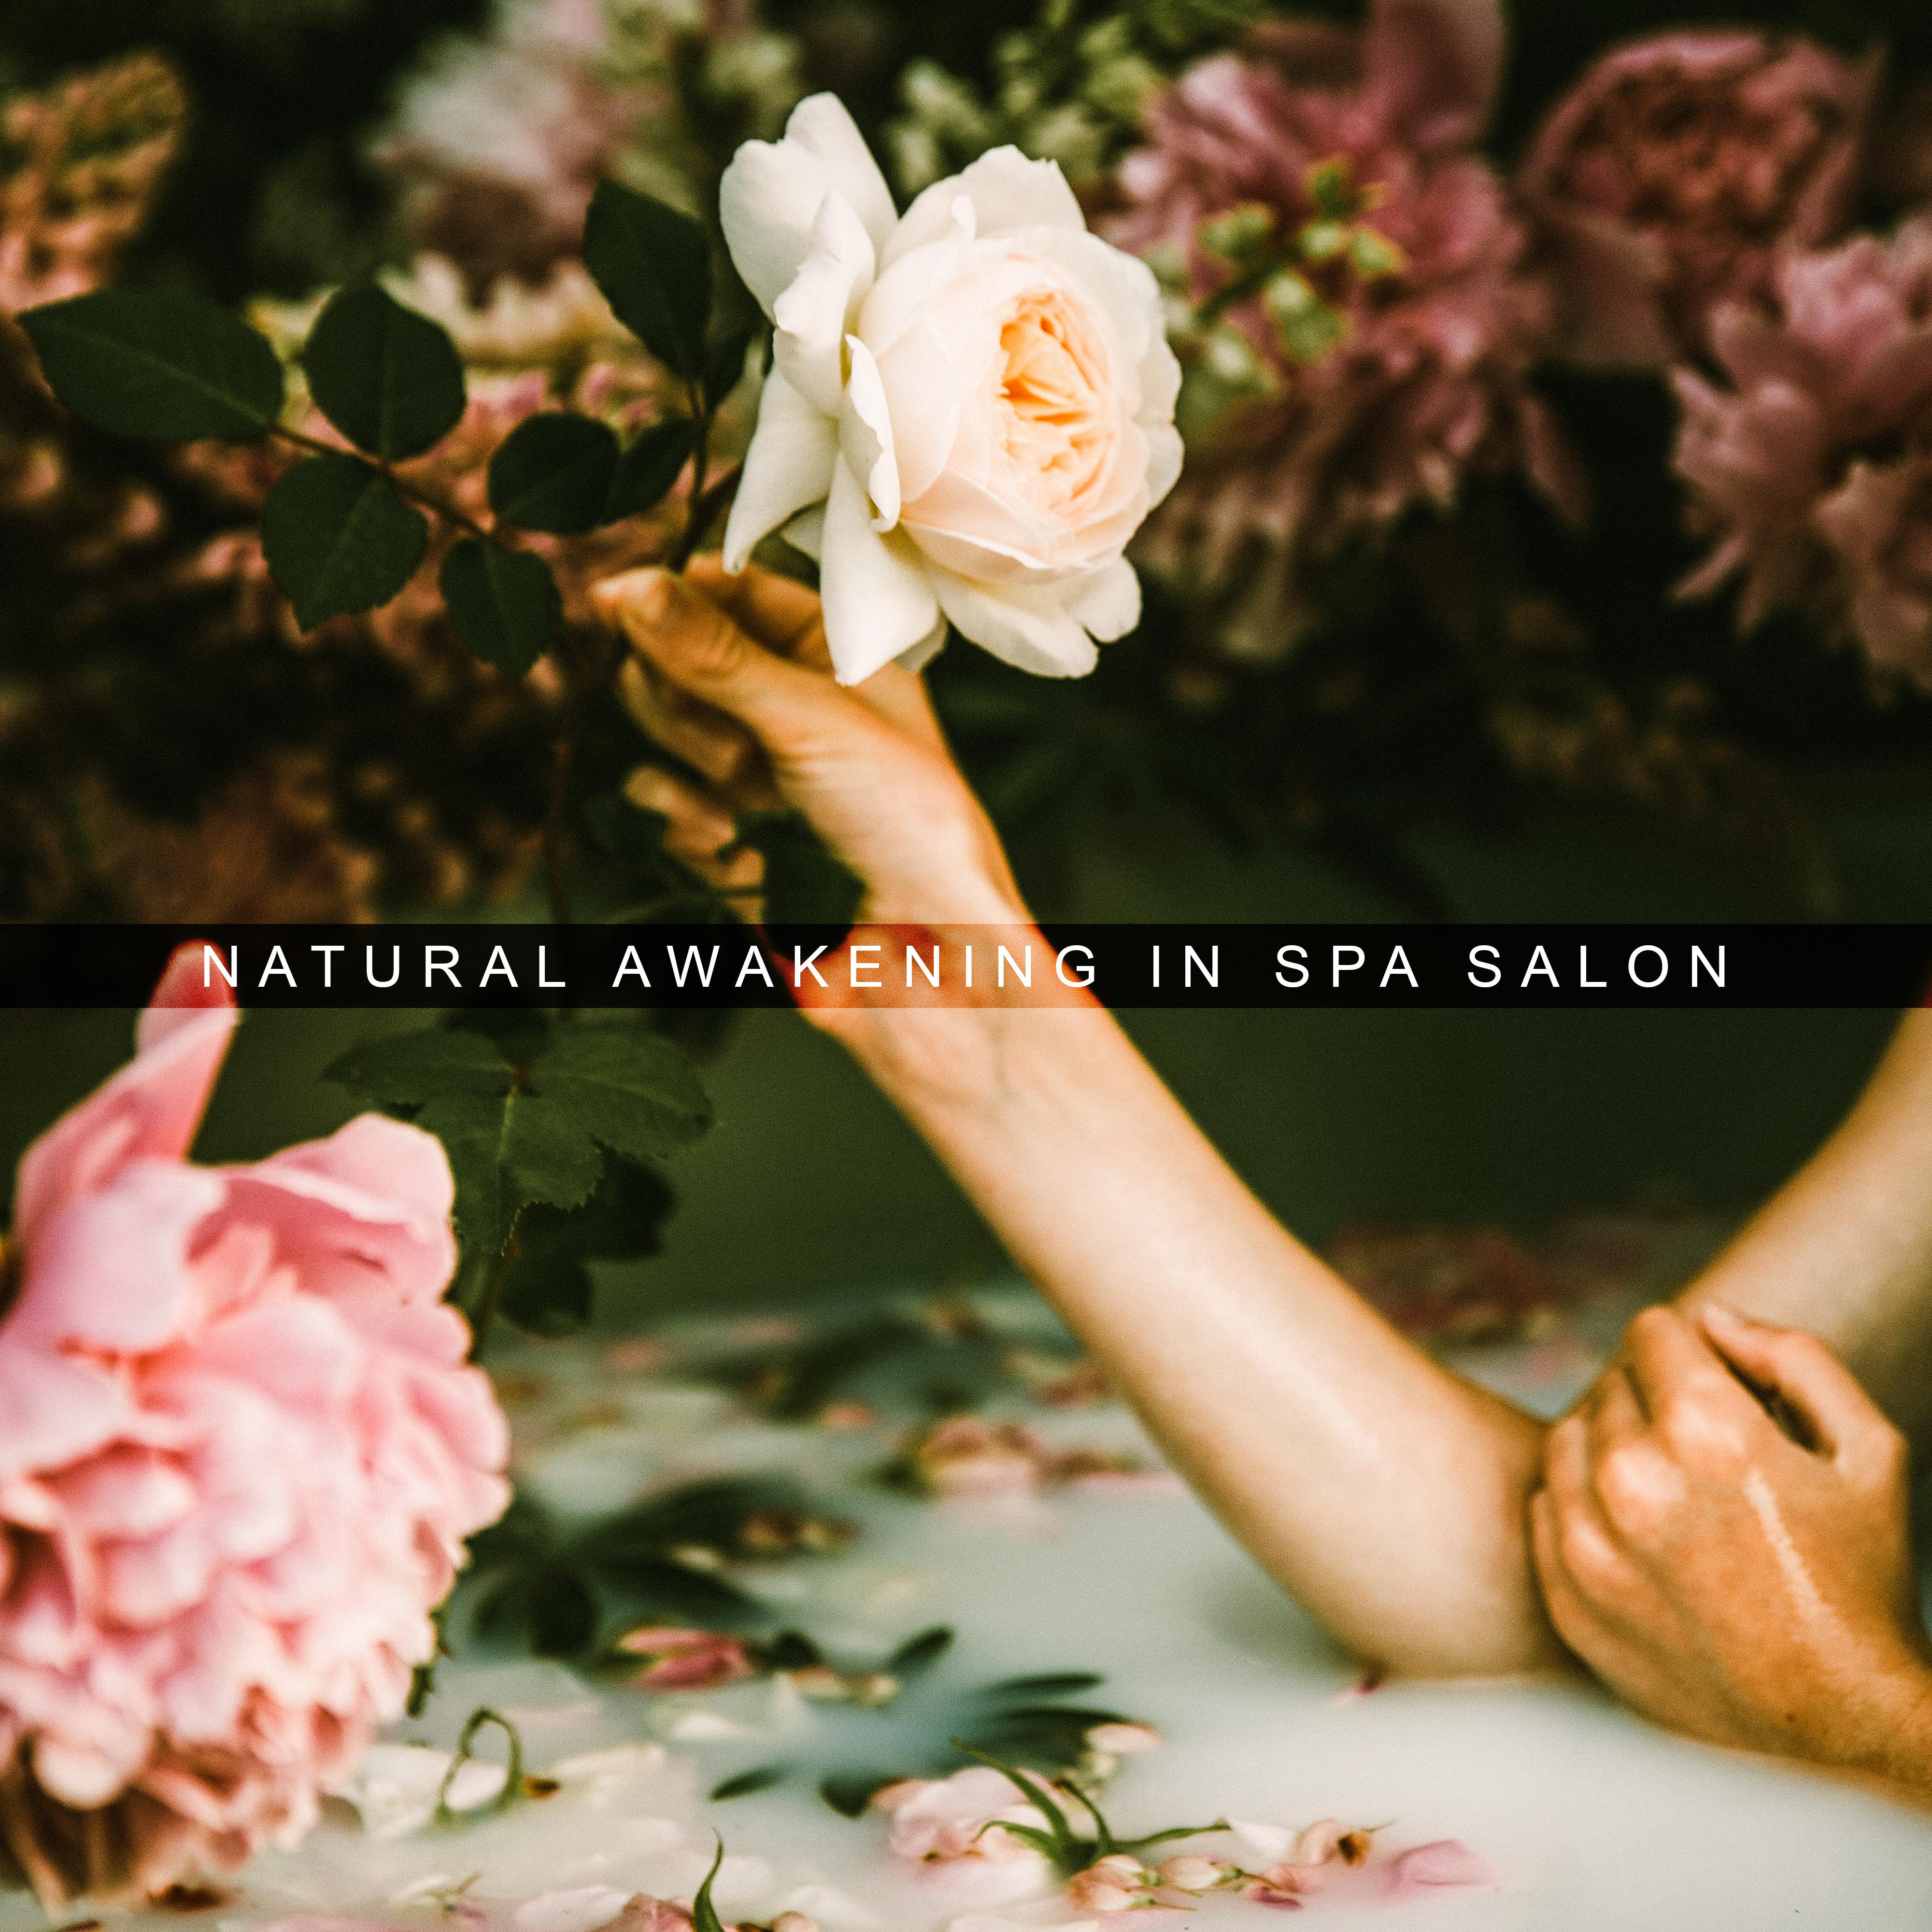 Natural Awakening in Spa Salon: 2019 Nature New Age Music Mix for Spa & Wellness Salon, Massage Therapy, Sauna, Hot Bath